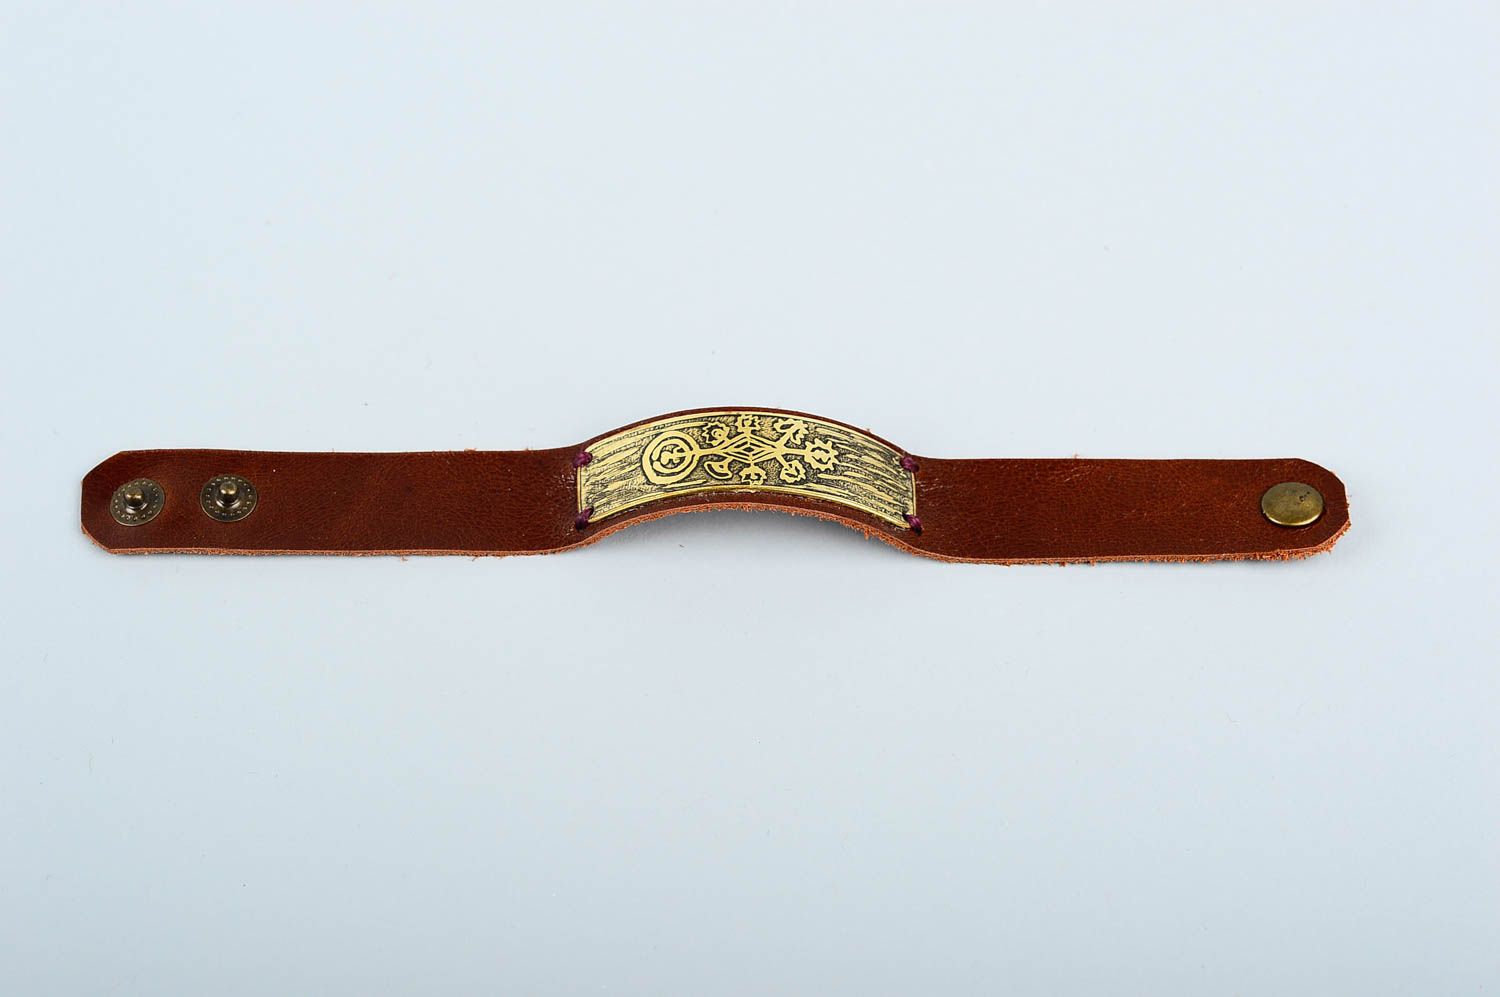 Unusual handmade leather bracelet fashion trends handmade accessories ideas photo 2